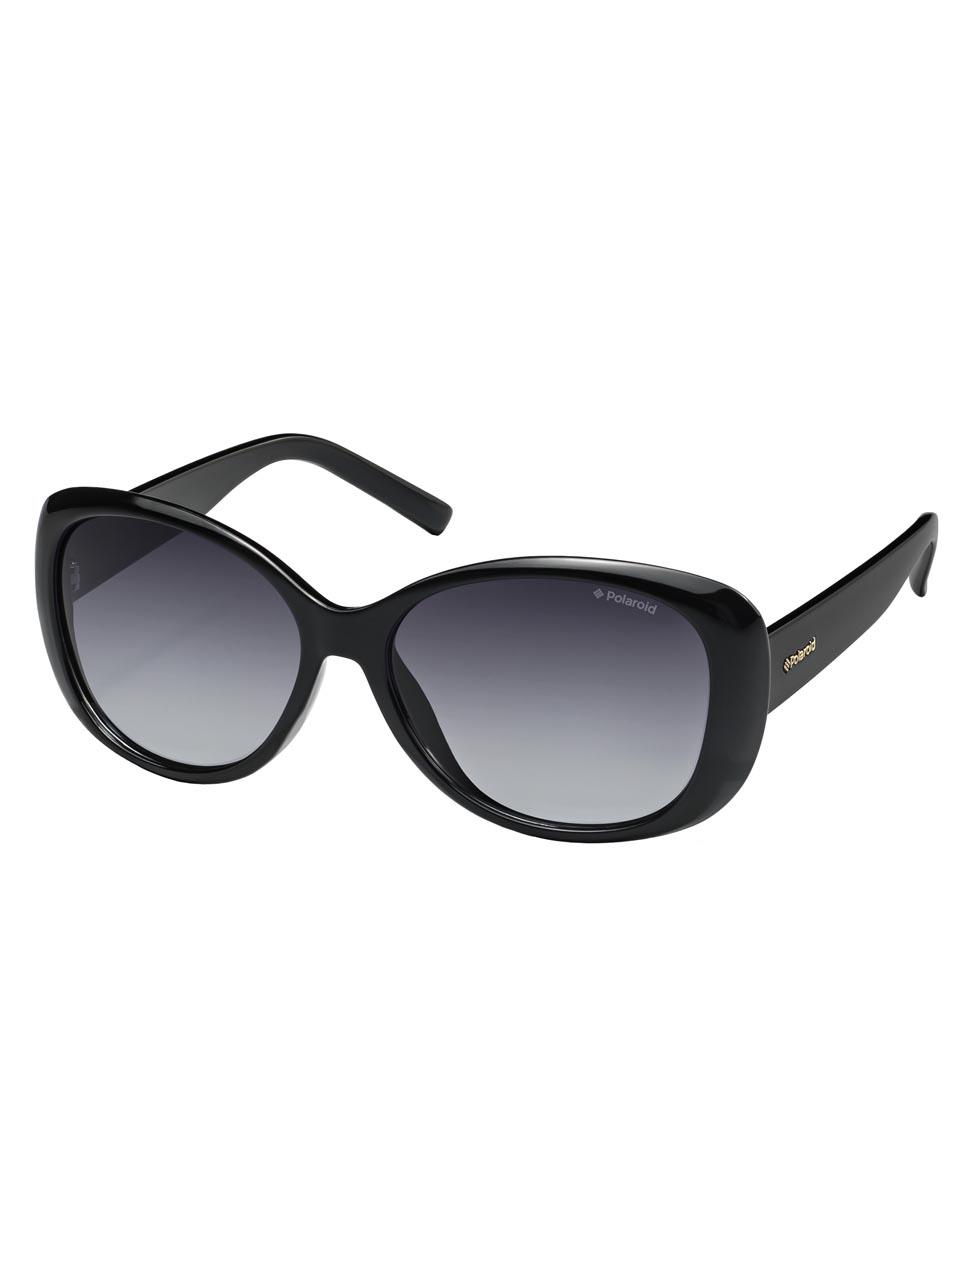 Beak Laboratory liner Polaroid, ladies sunglasses | Frankfurt Airport Online Shopping